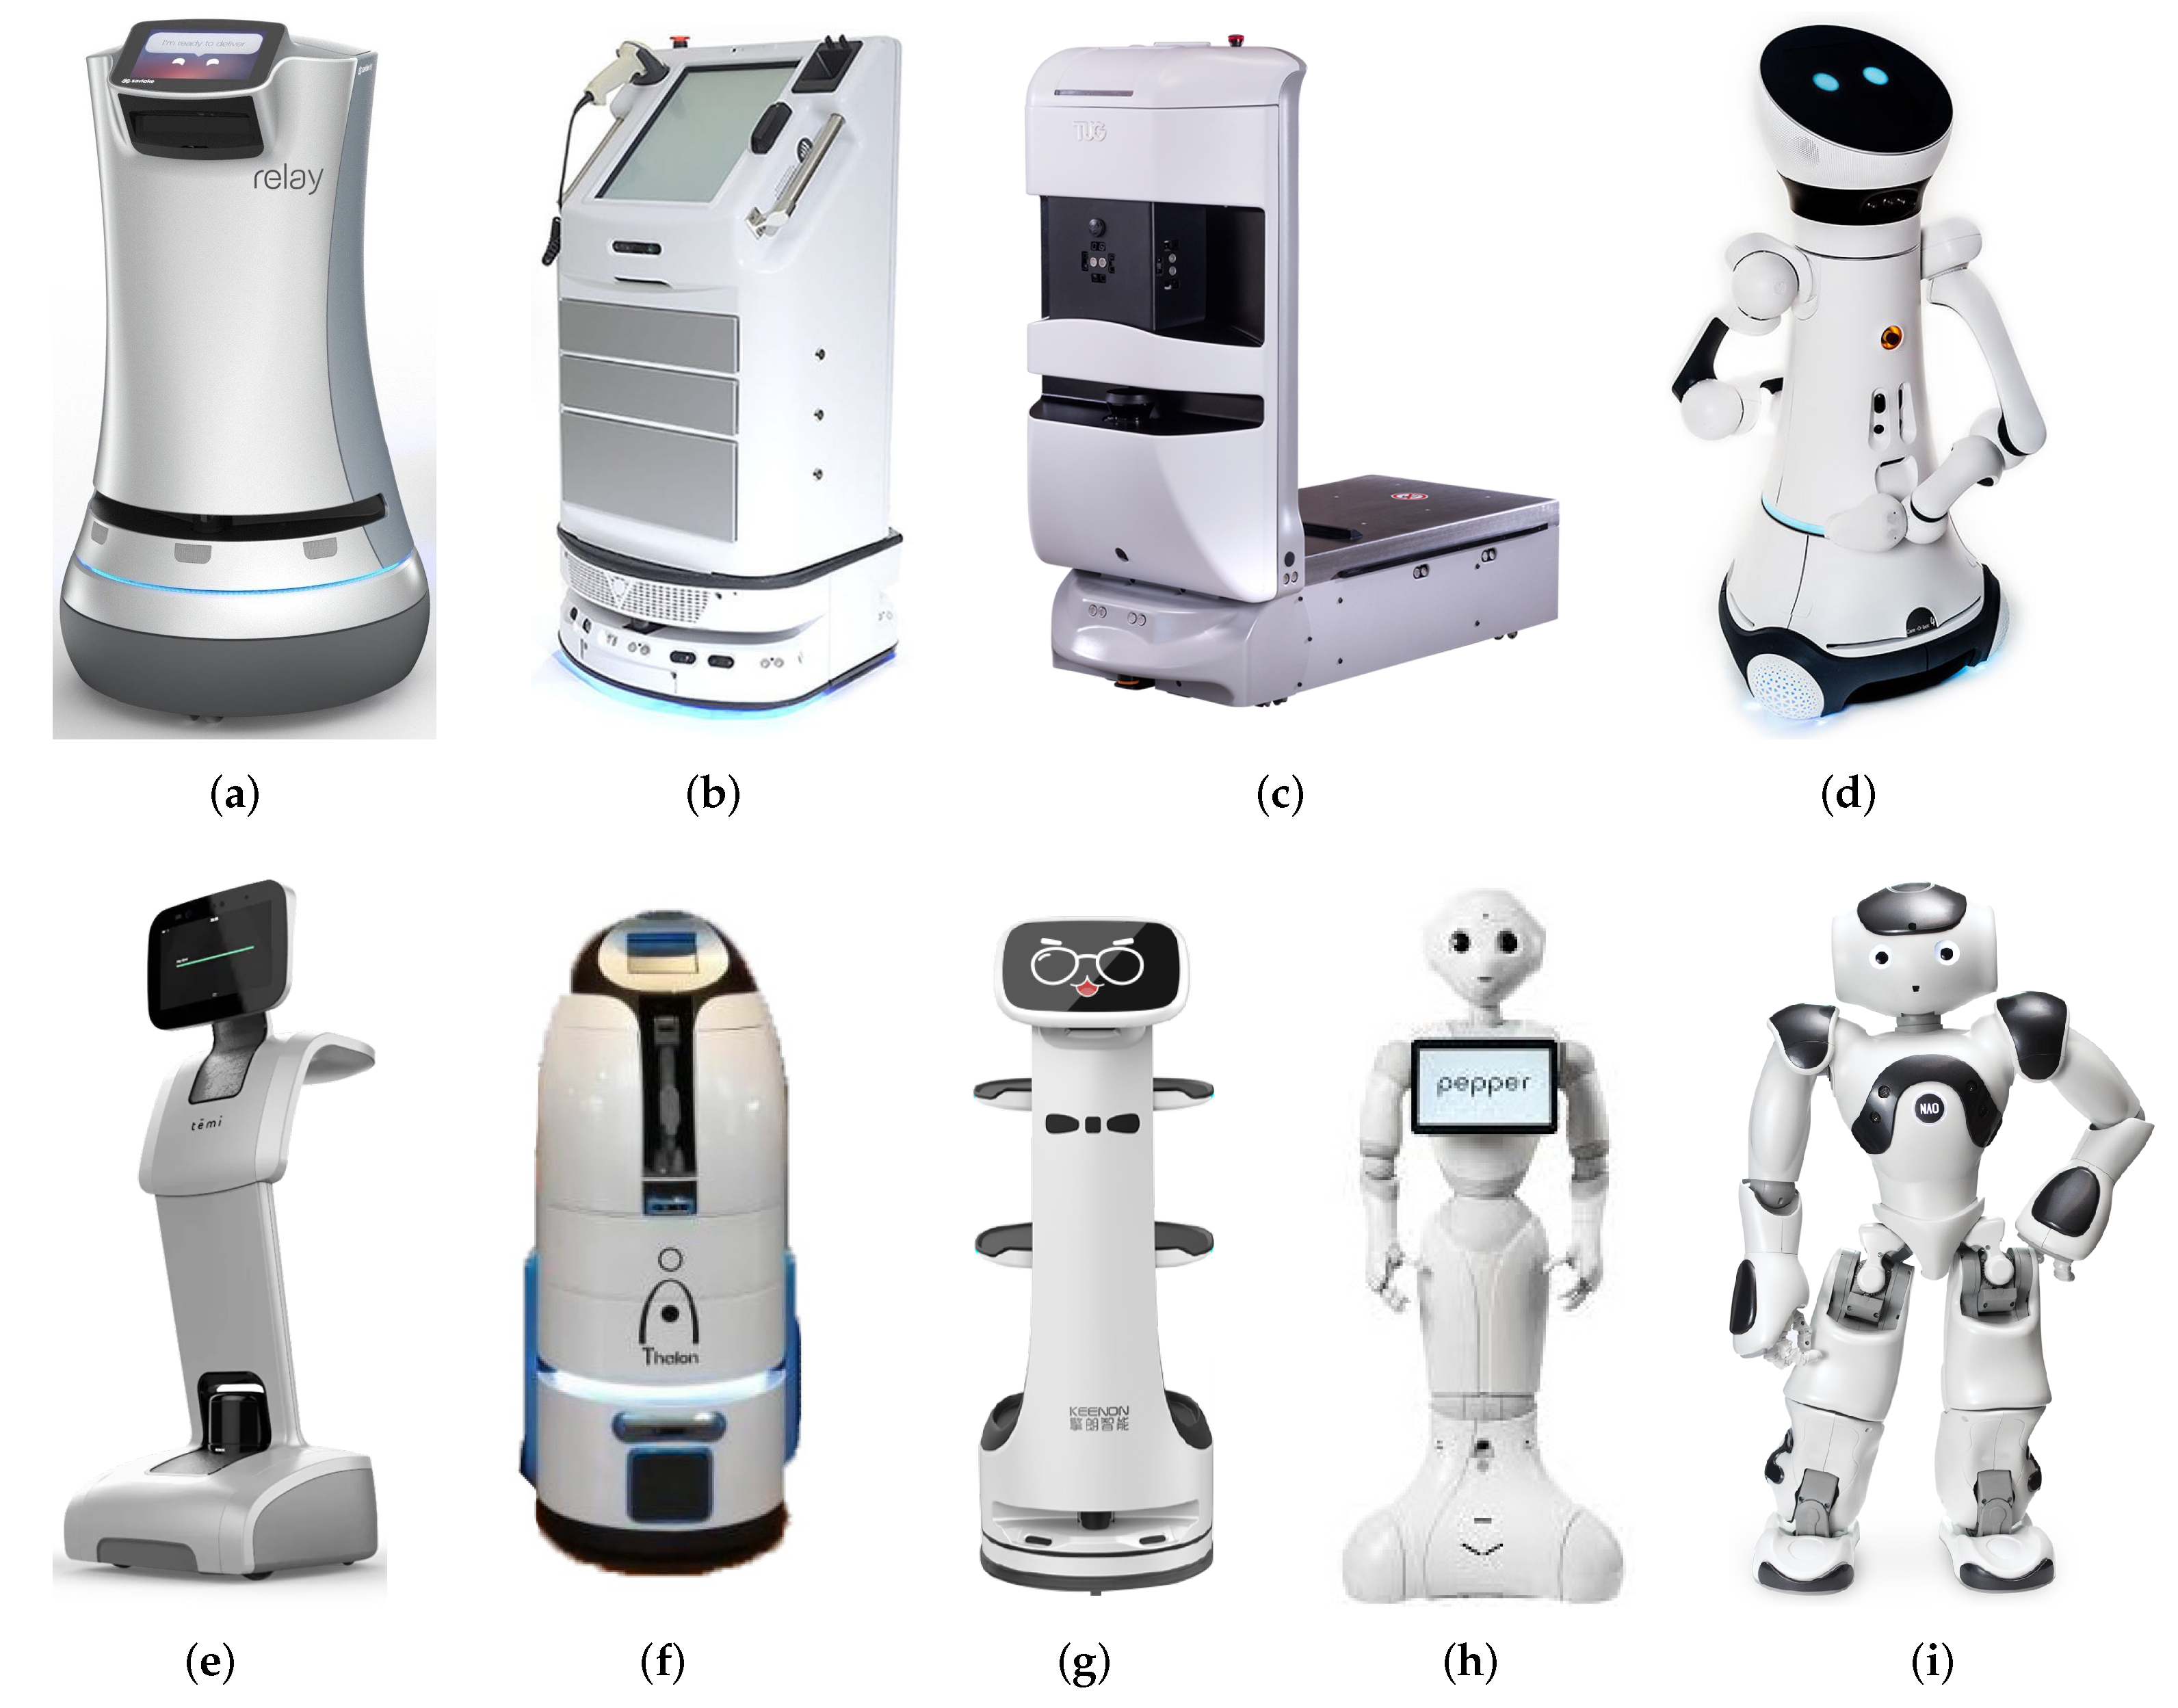 Sensors Free Full-Text Development of the Social Robot